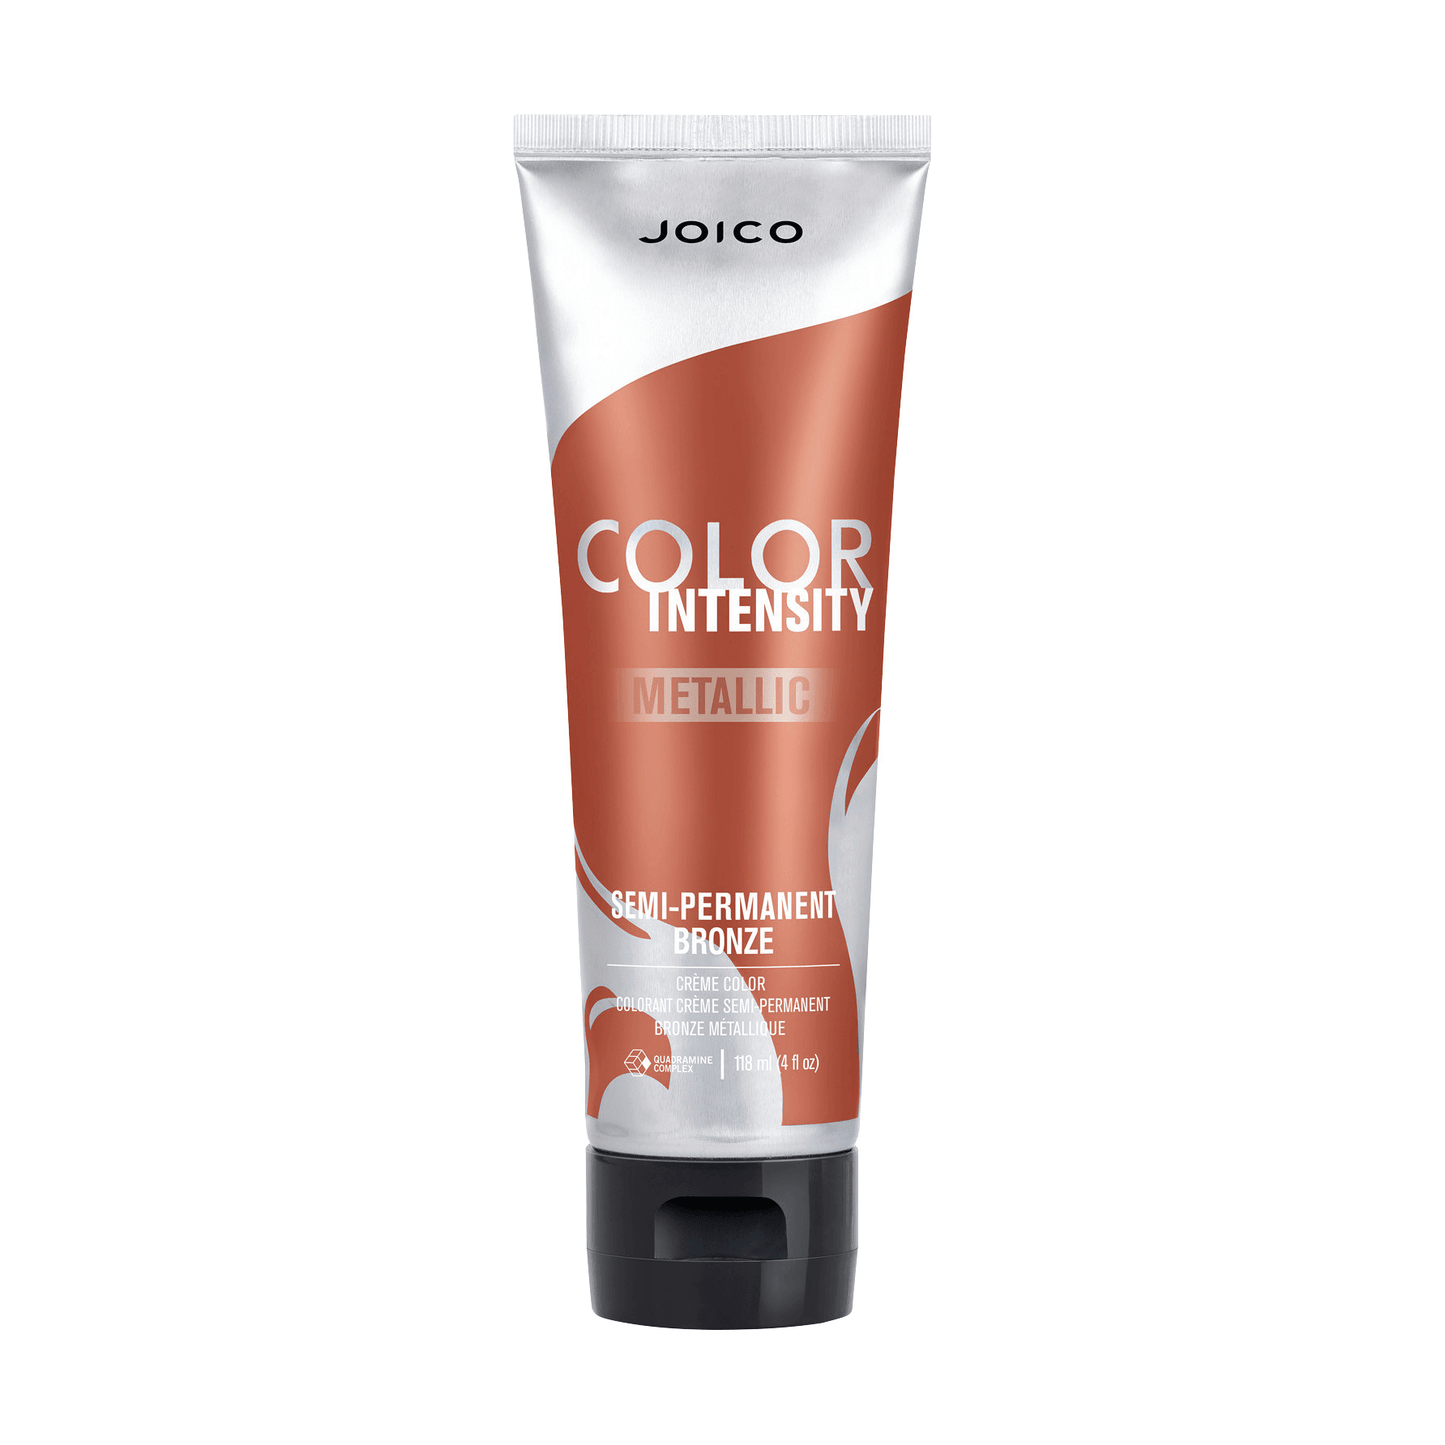 Joico Color Intensity Bronze Semi-Permanent Hair Color 118ml